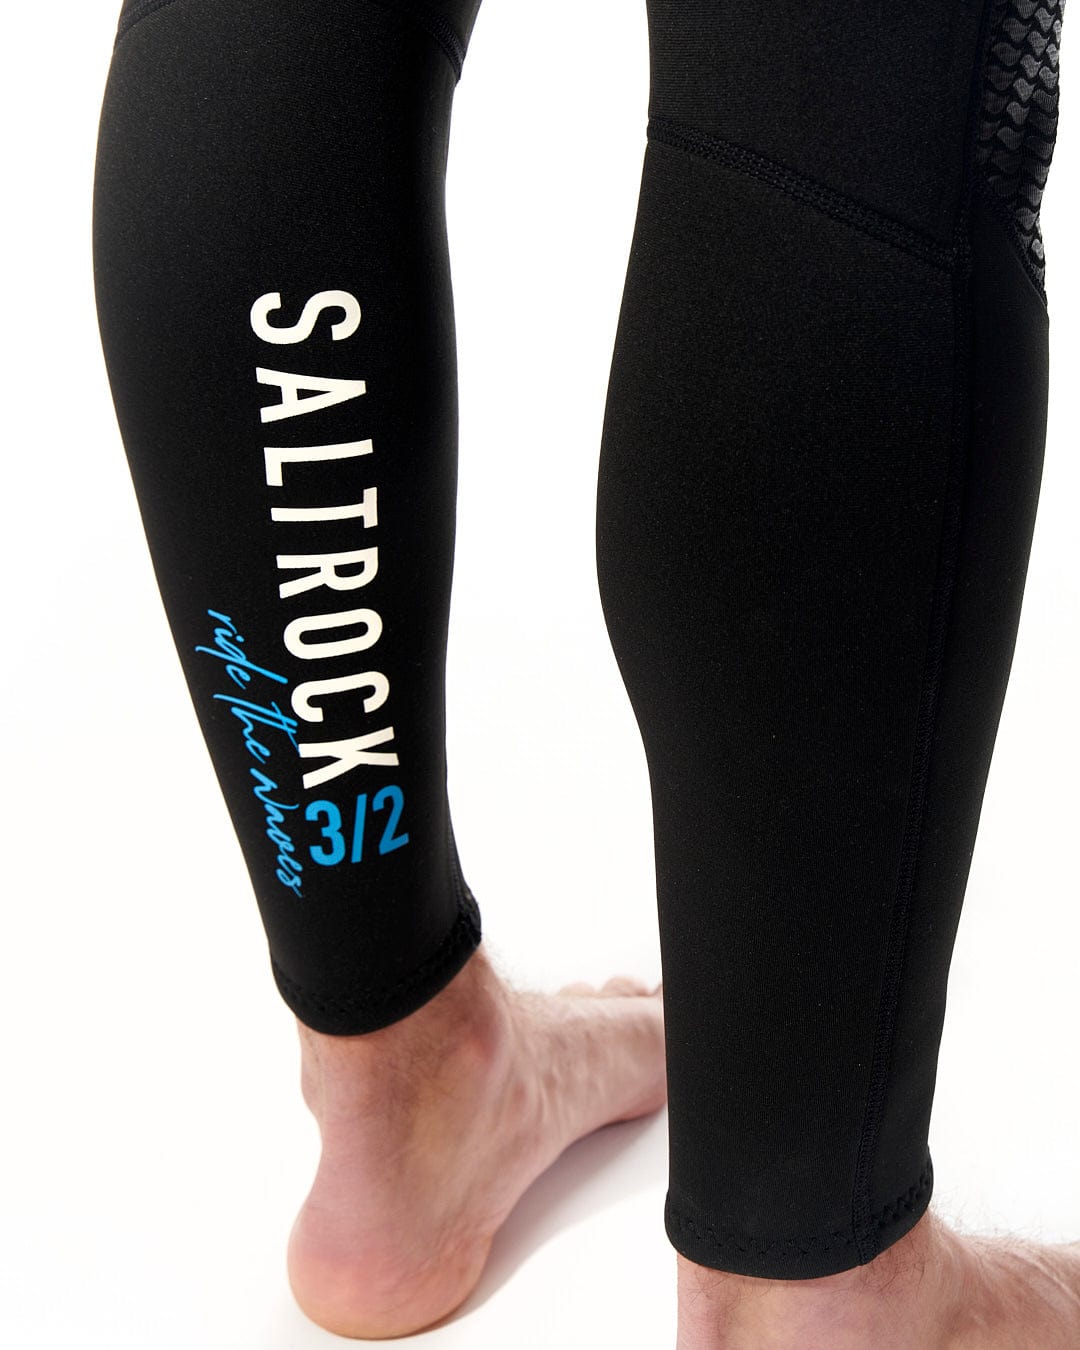 The legs of a man wearing a Saltrock Core - Mens 3/2 Full Wetsuit - Blue/Black.